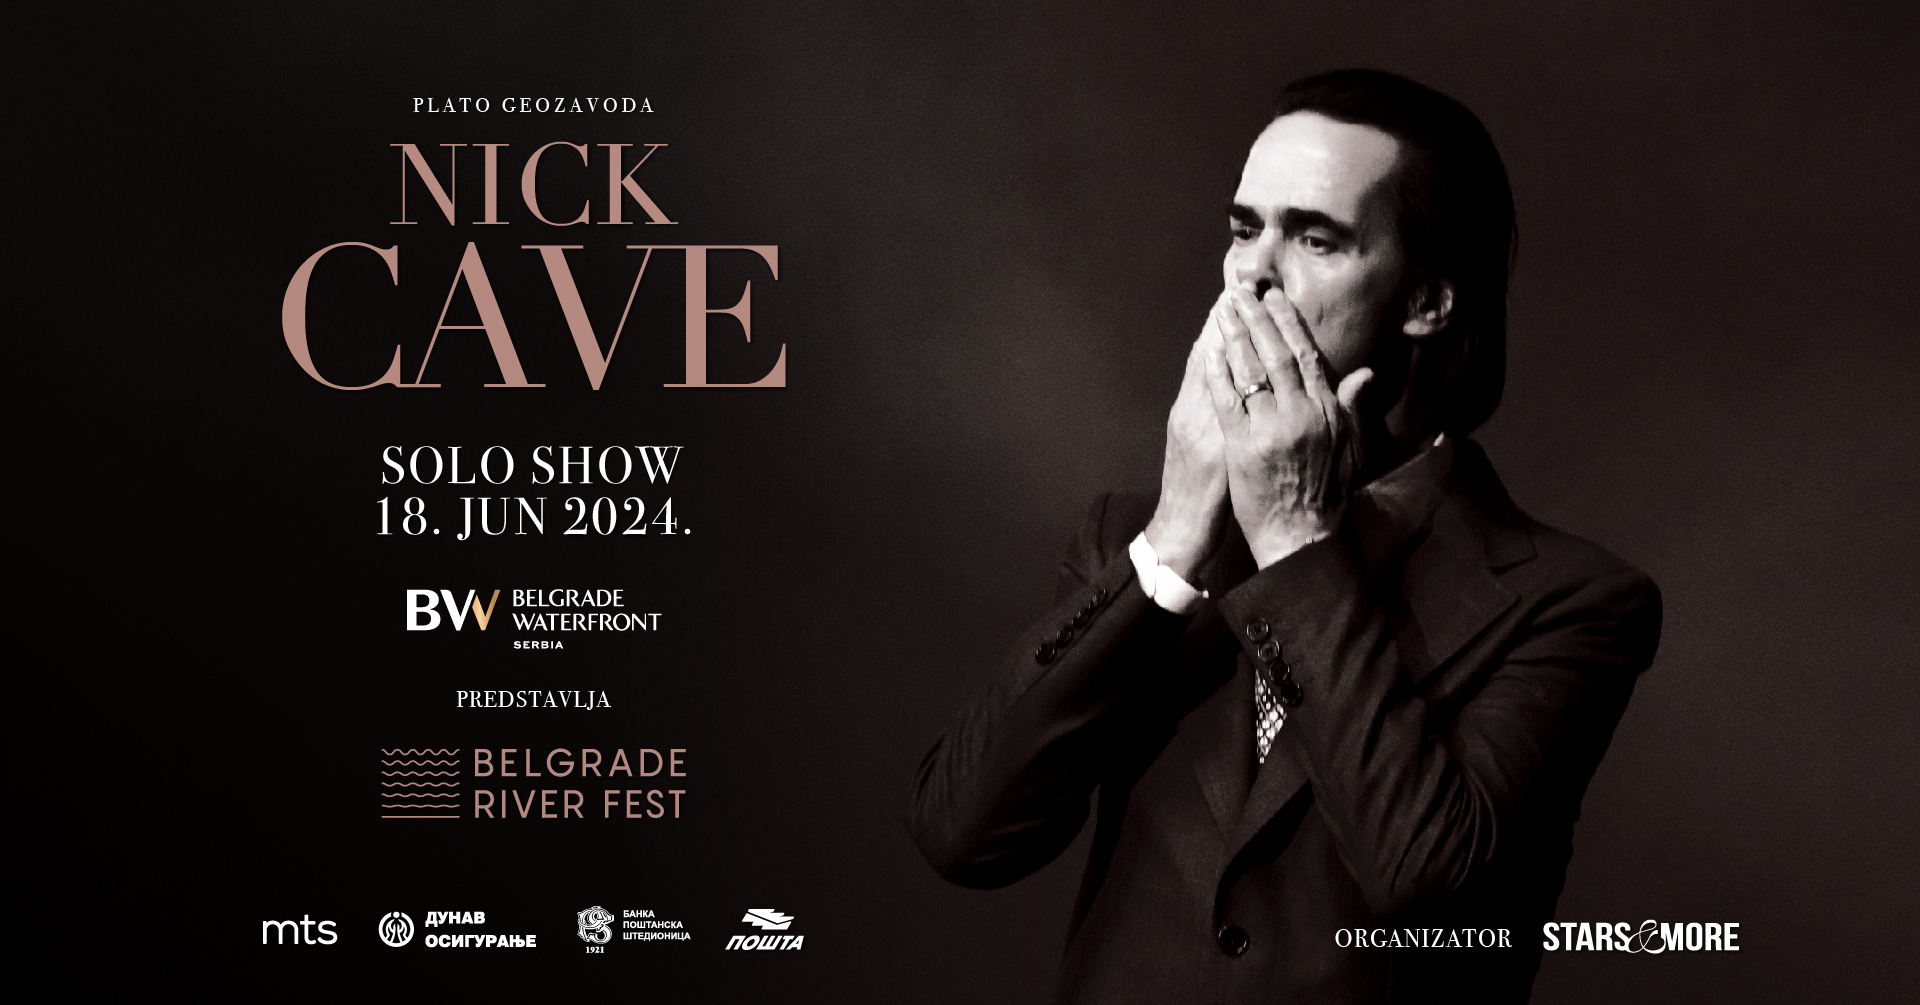 Nick Cave,BelgradeRiverFest 18.06.2024. Geozavod plato